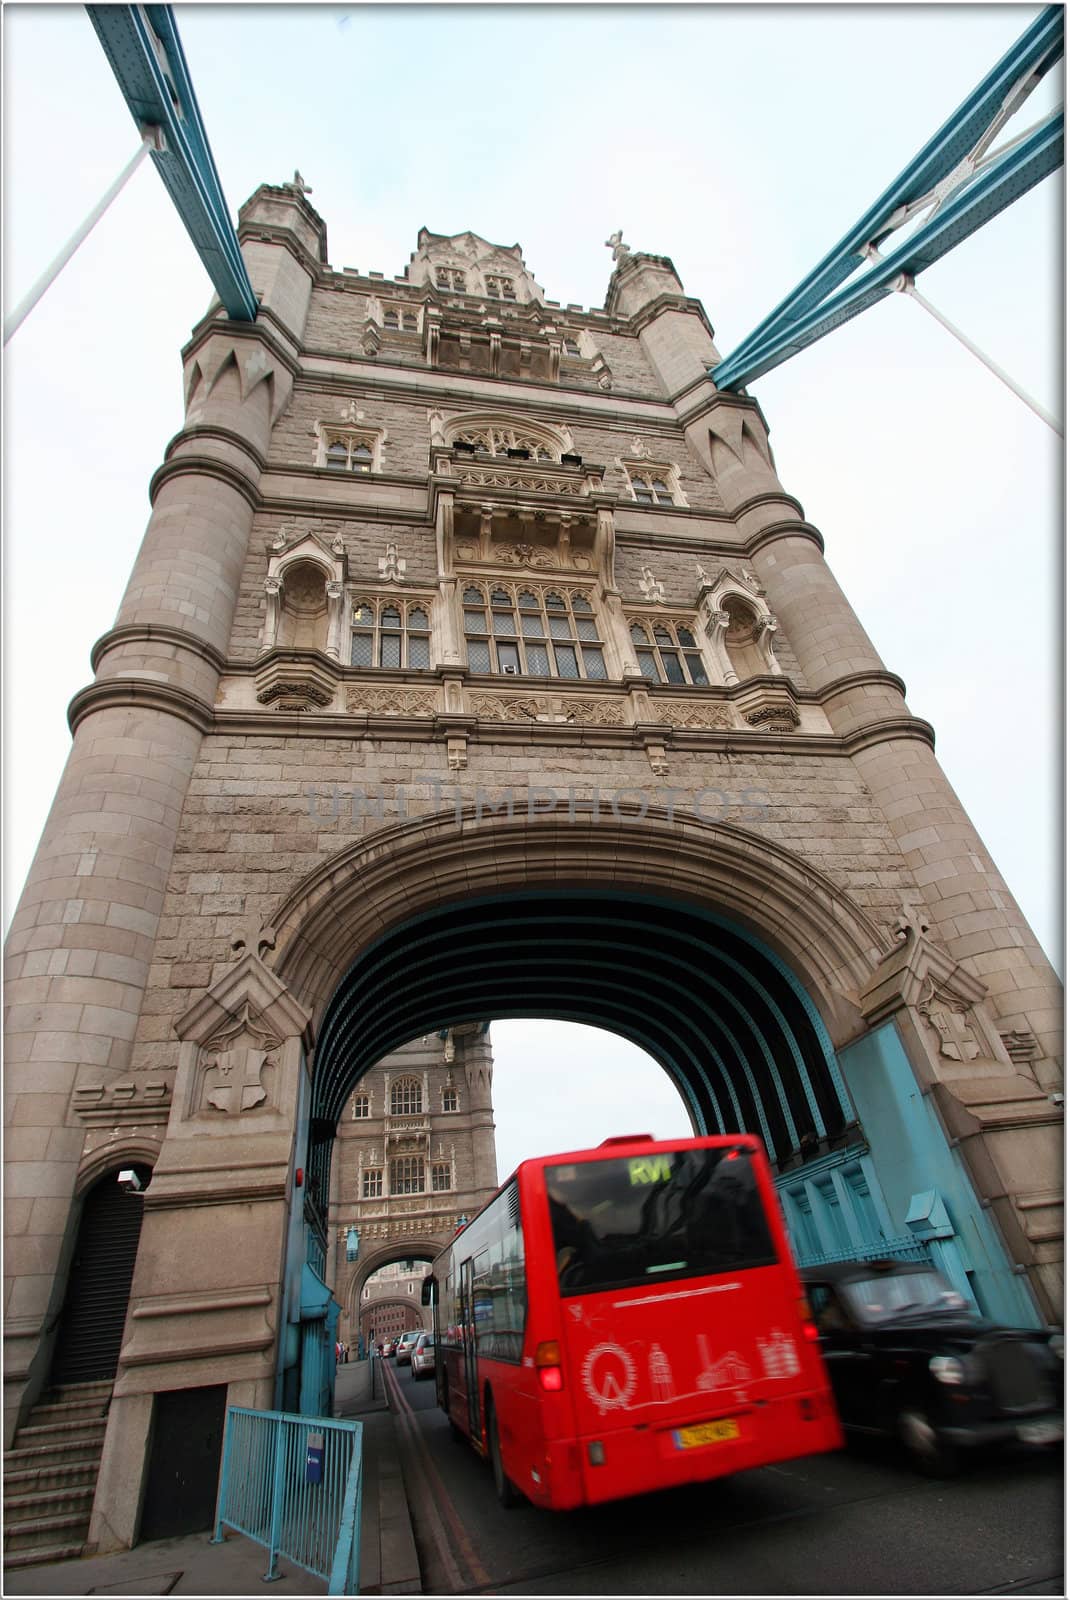 London Tower Bridge with bus passing through